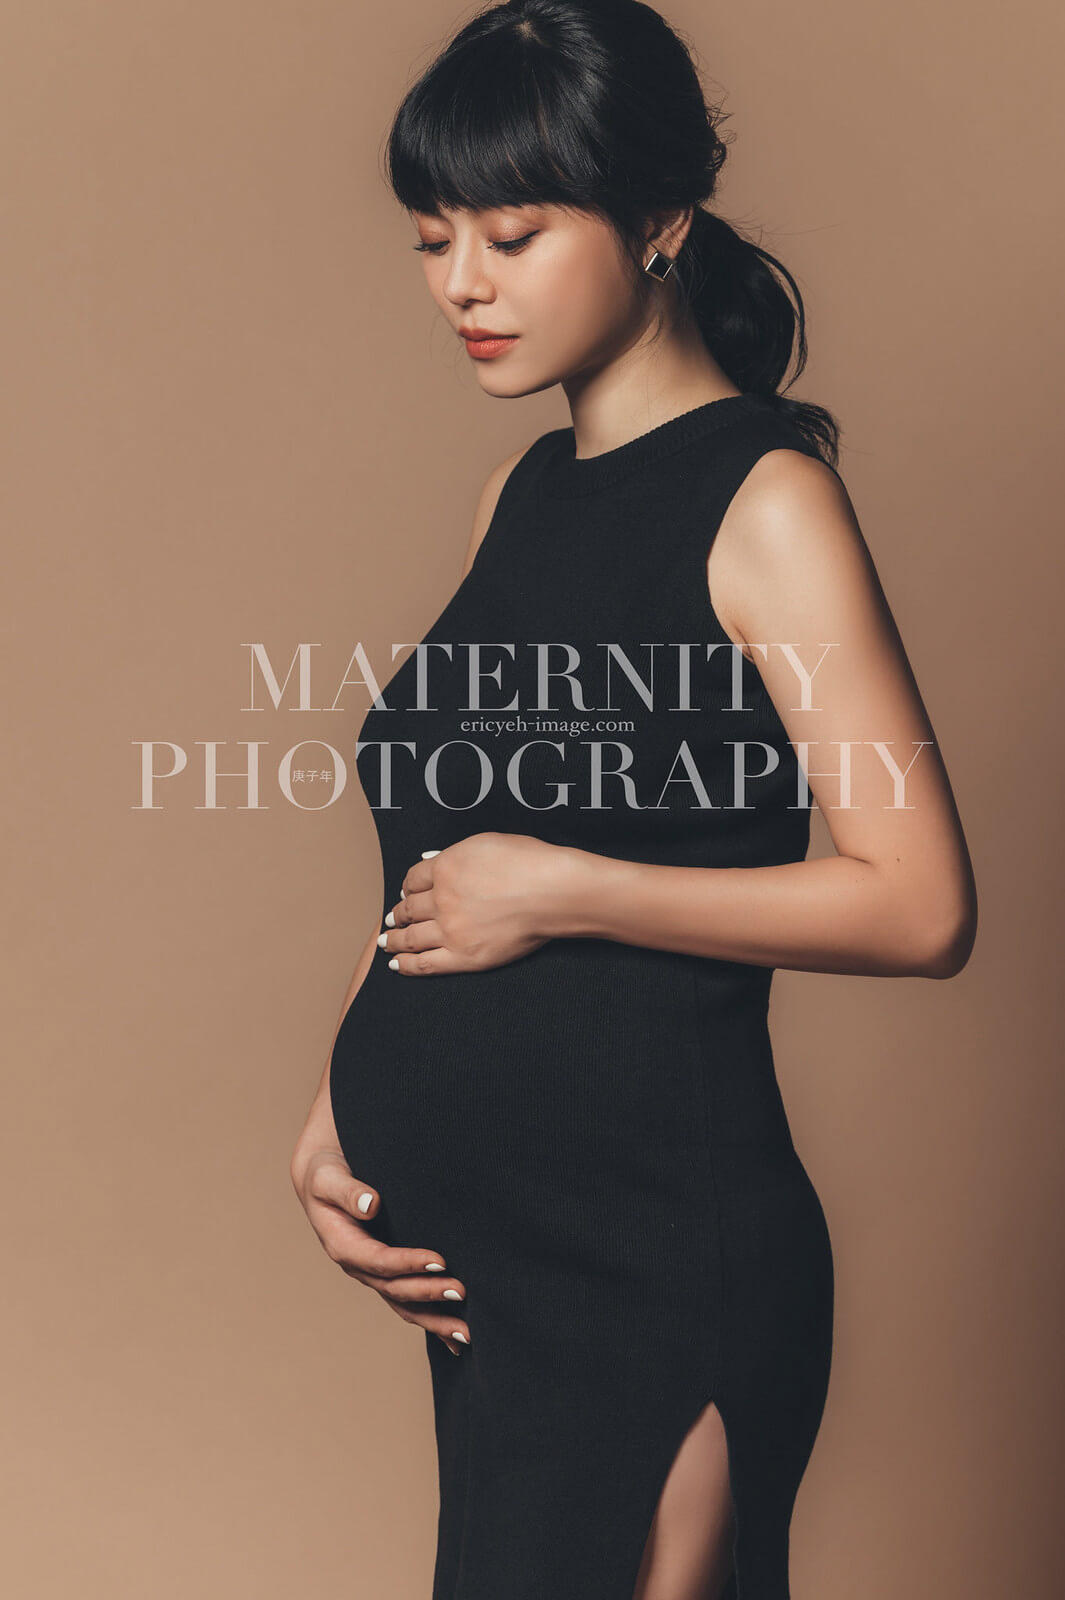 Maternity make up / Photography : Eric